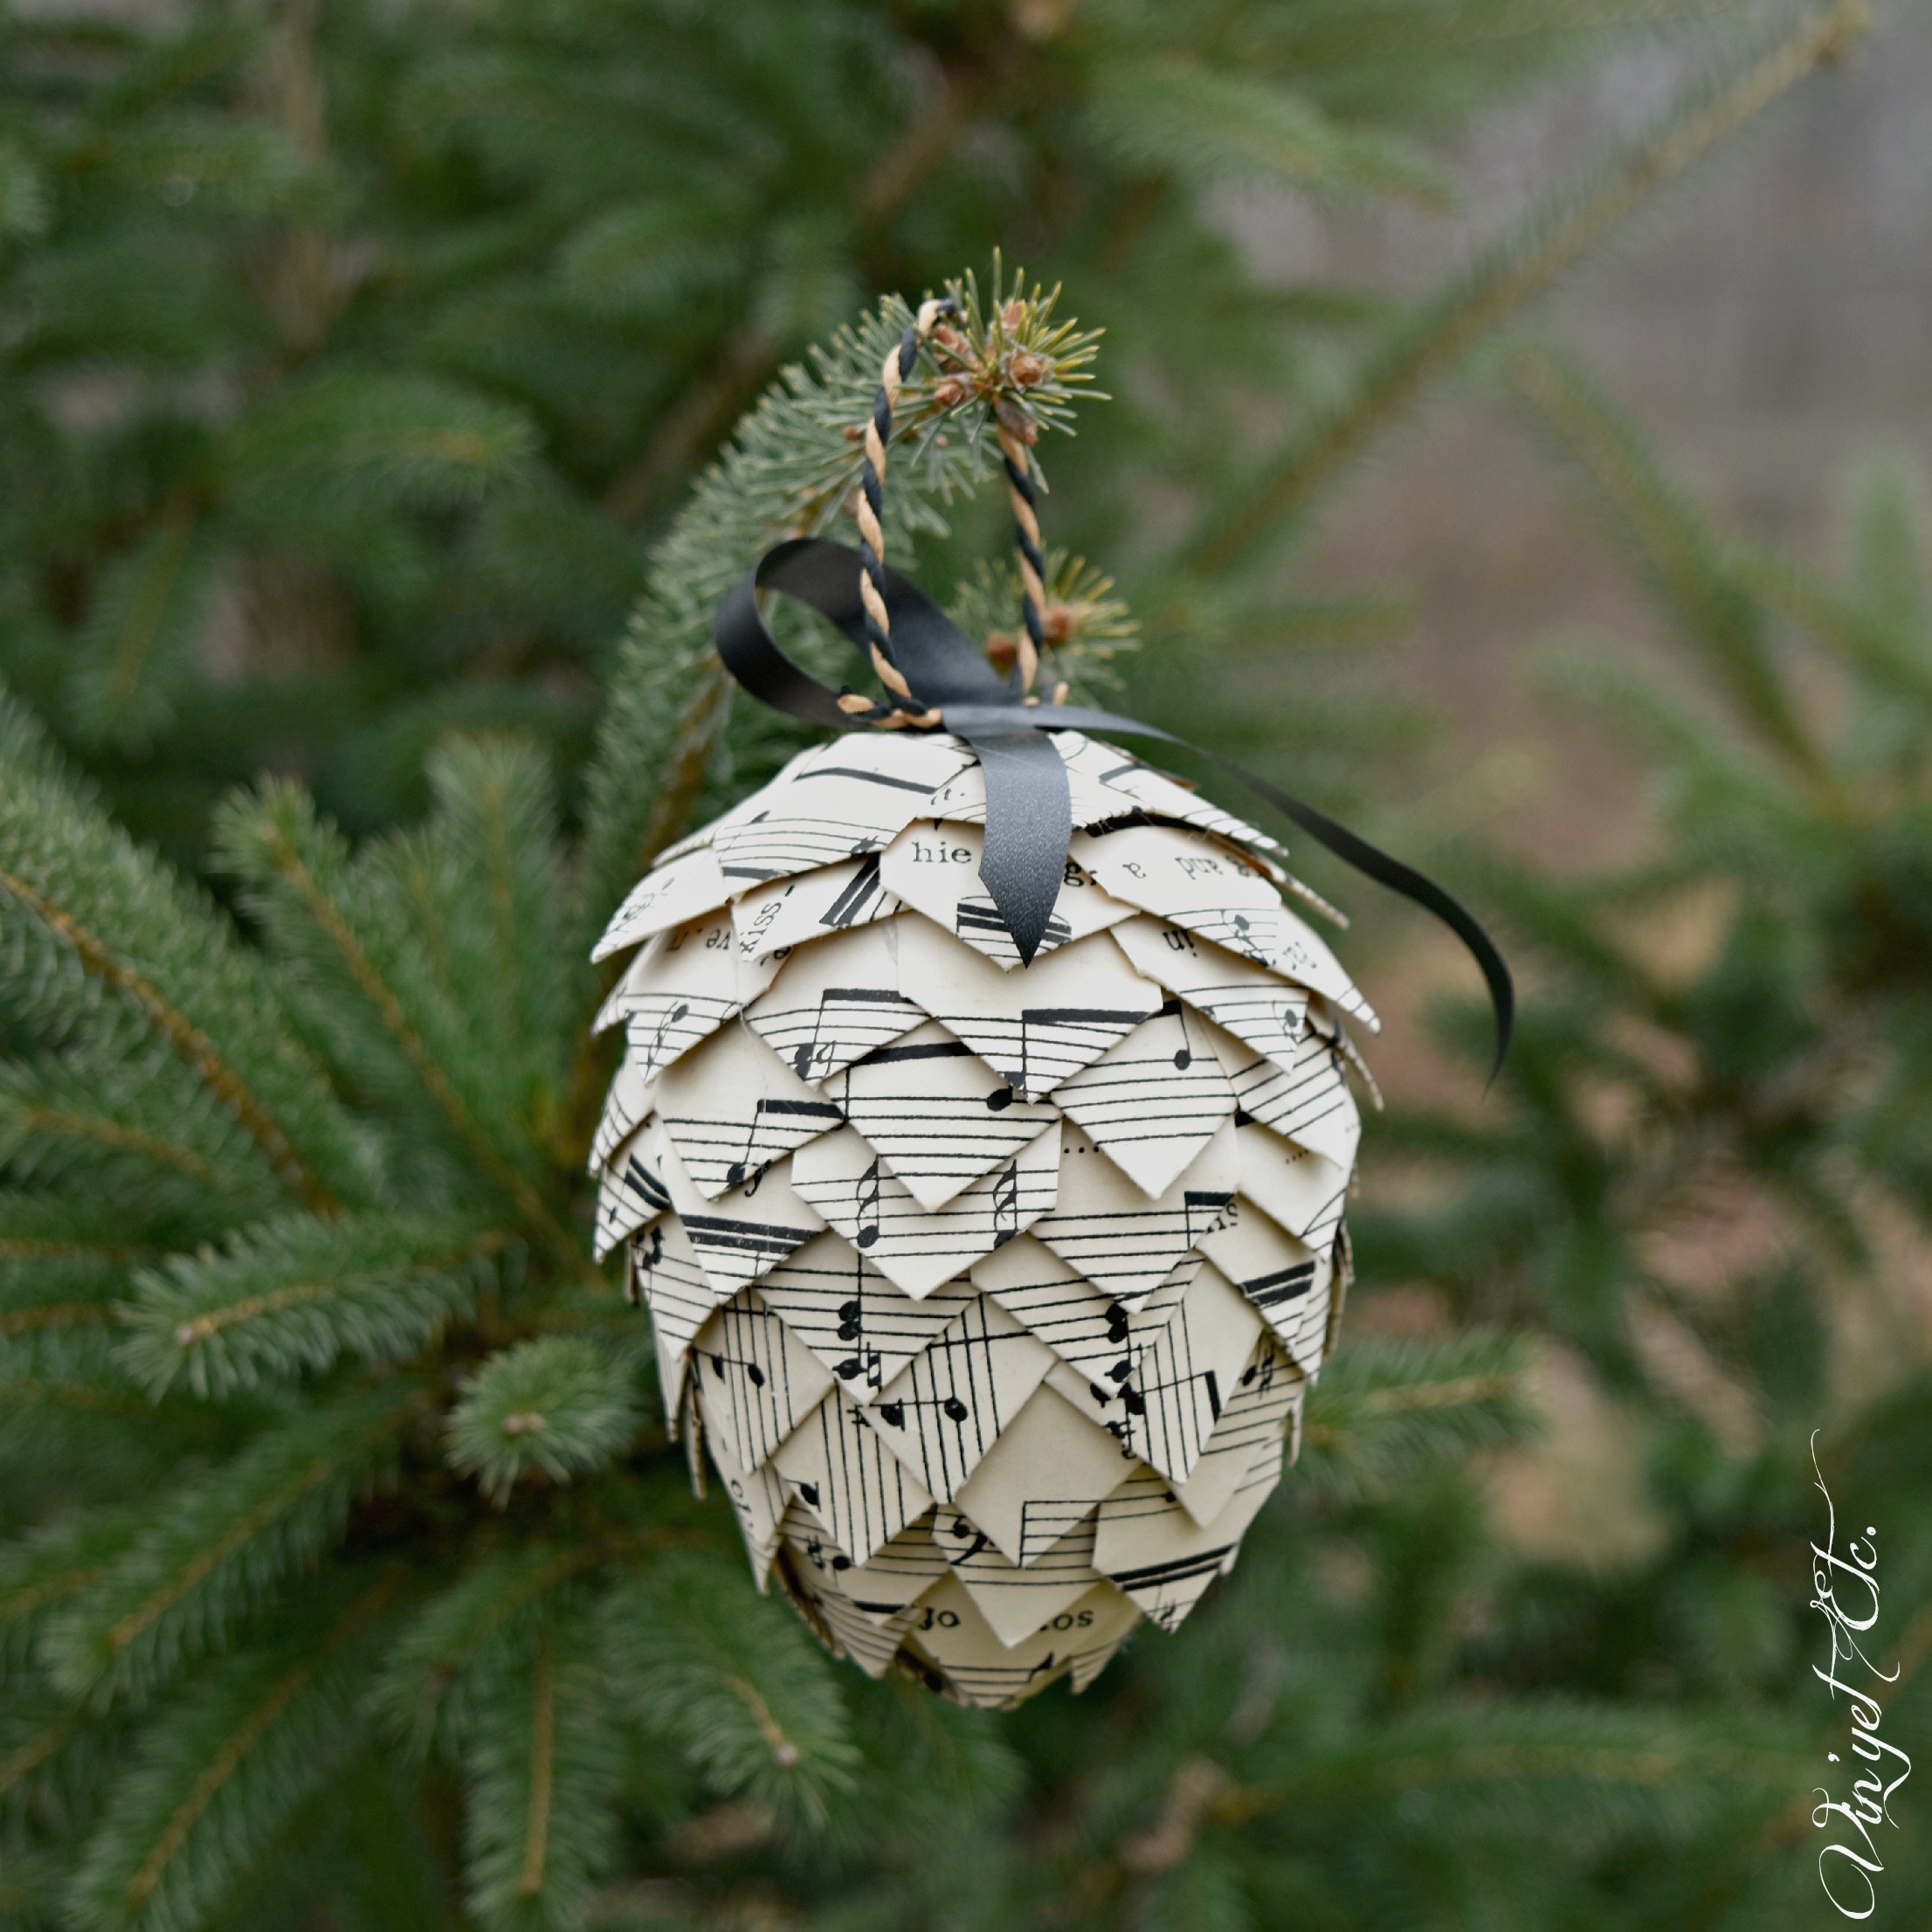 34 Pine Cone Crafts - DIY Christmas Decorations & Ornament Ideas